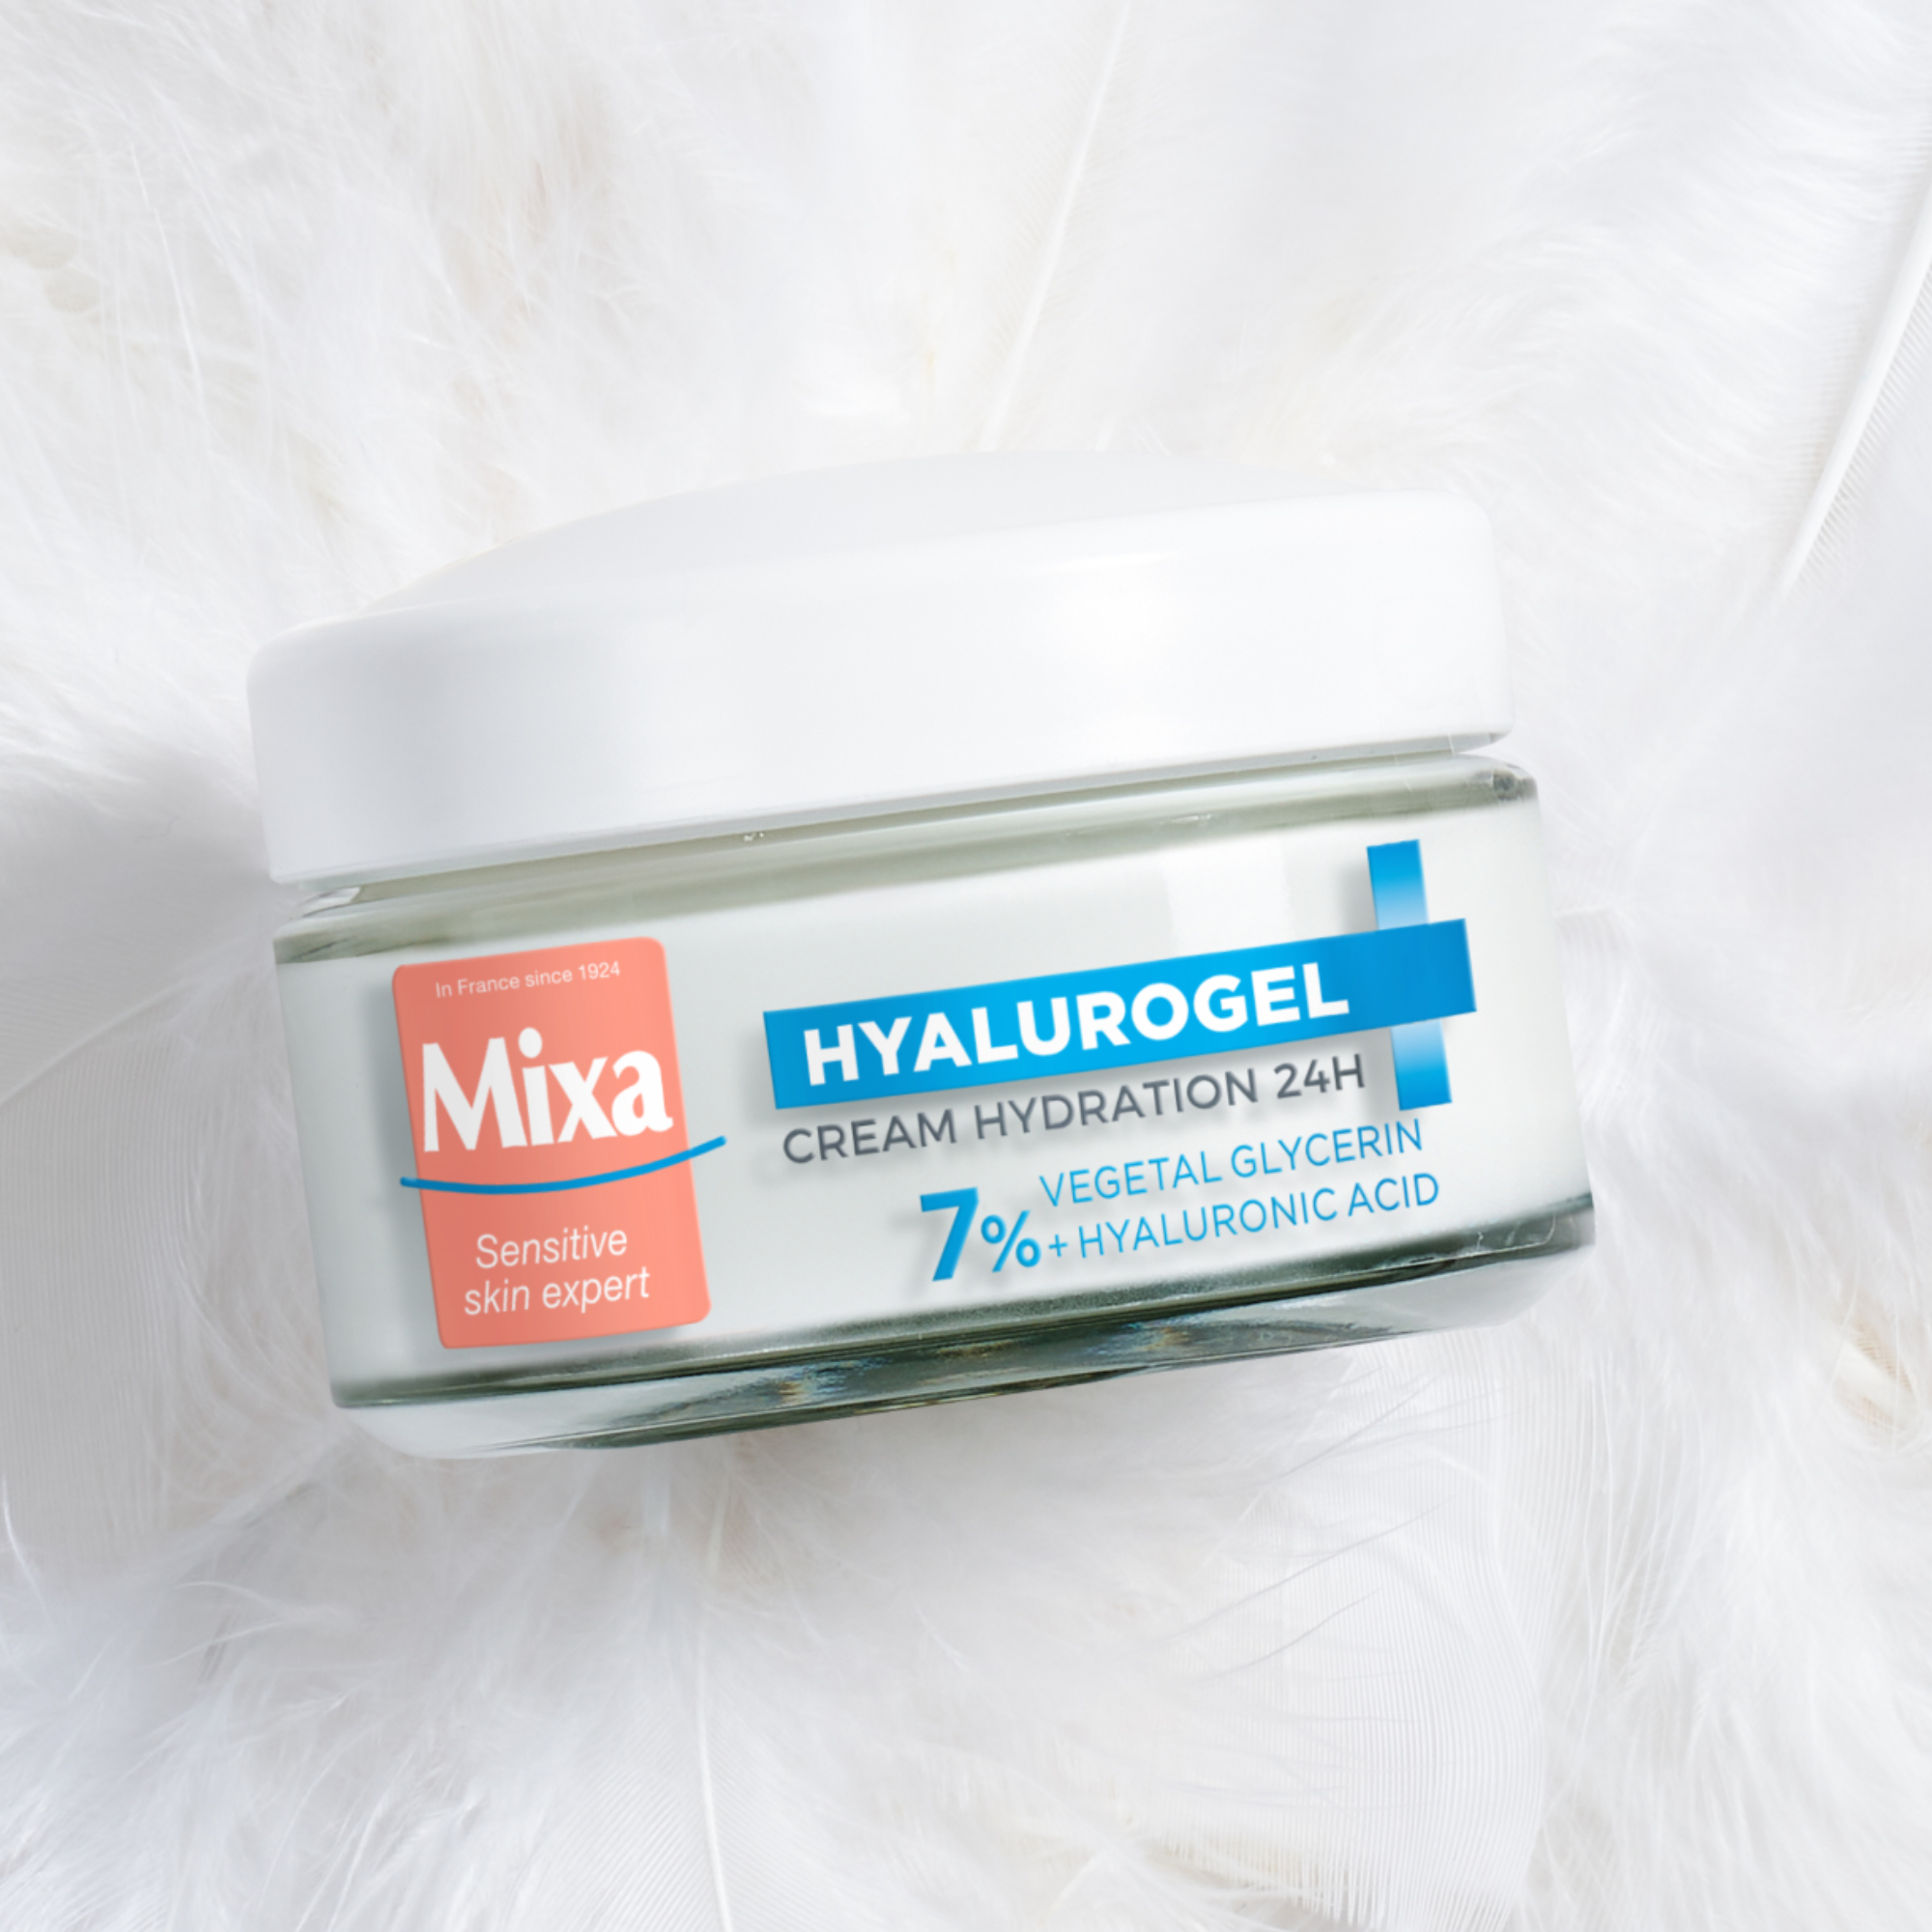 Mixa-Hyalurogel-Cream